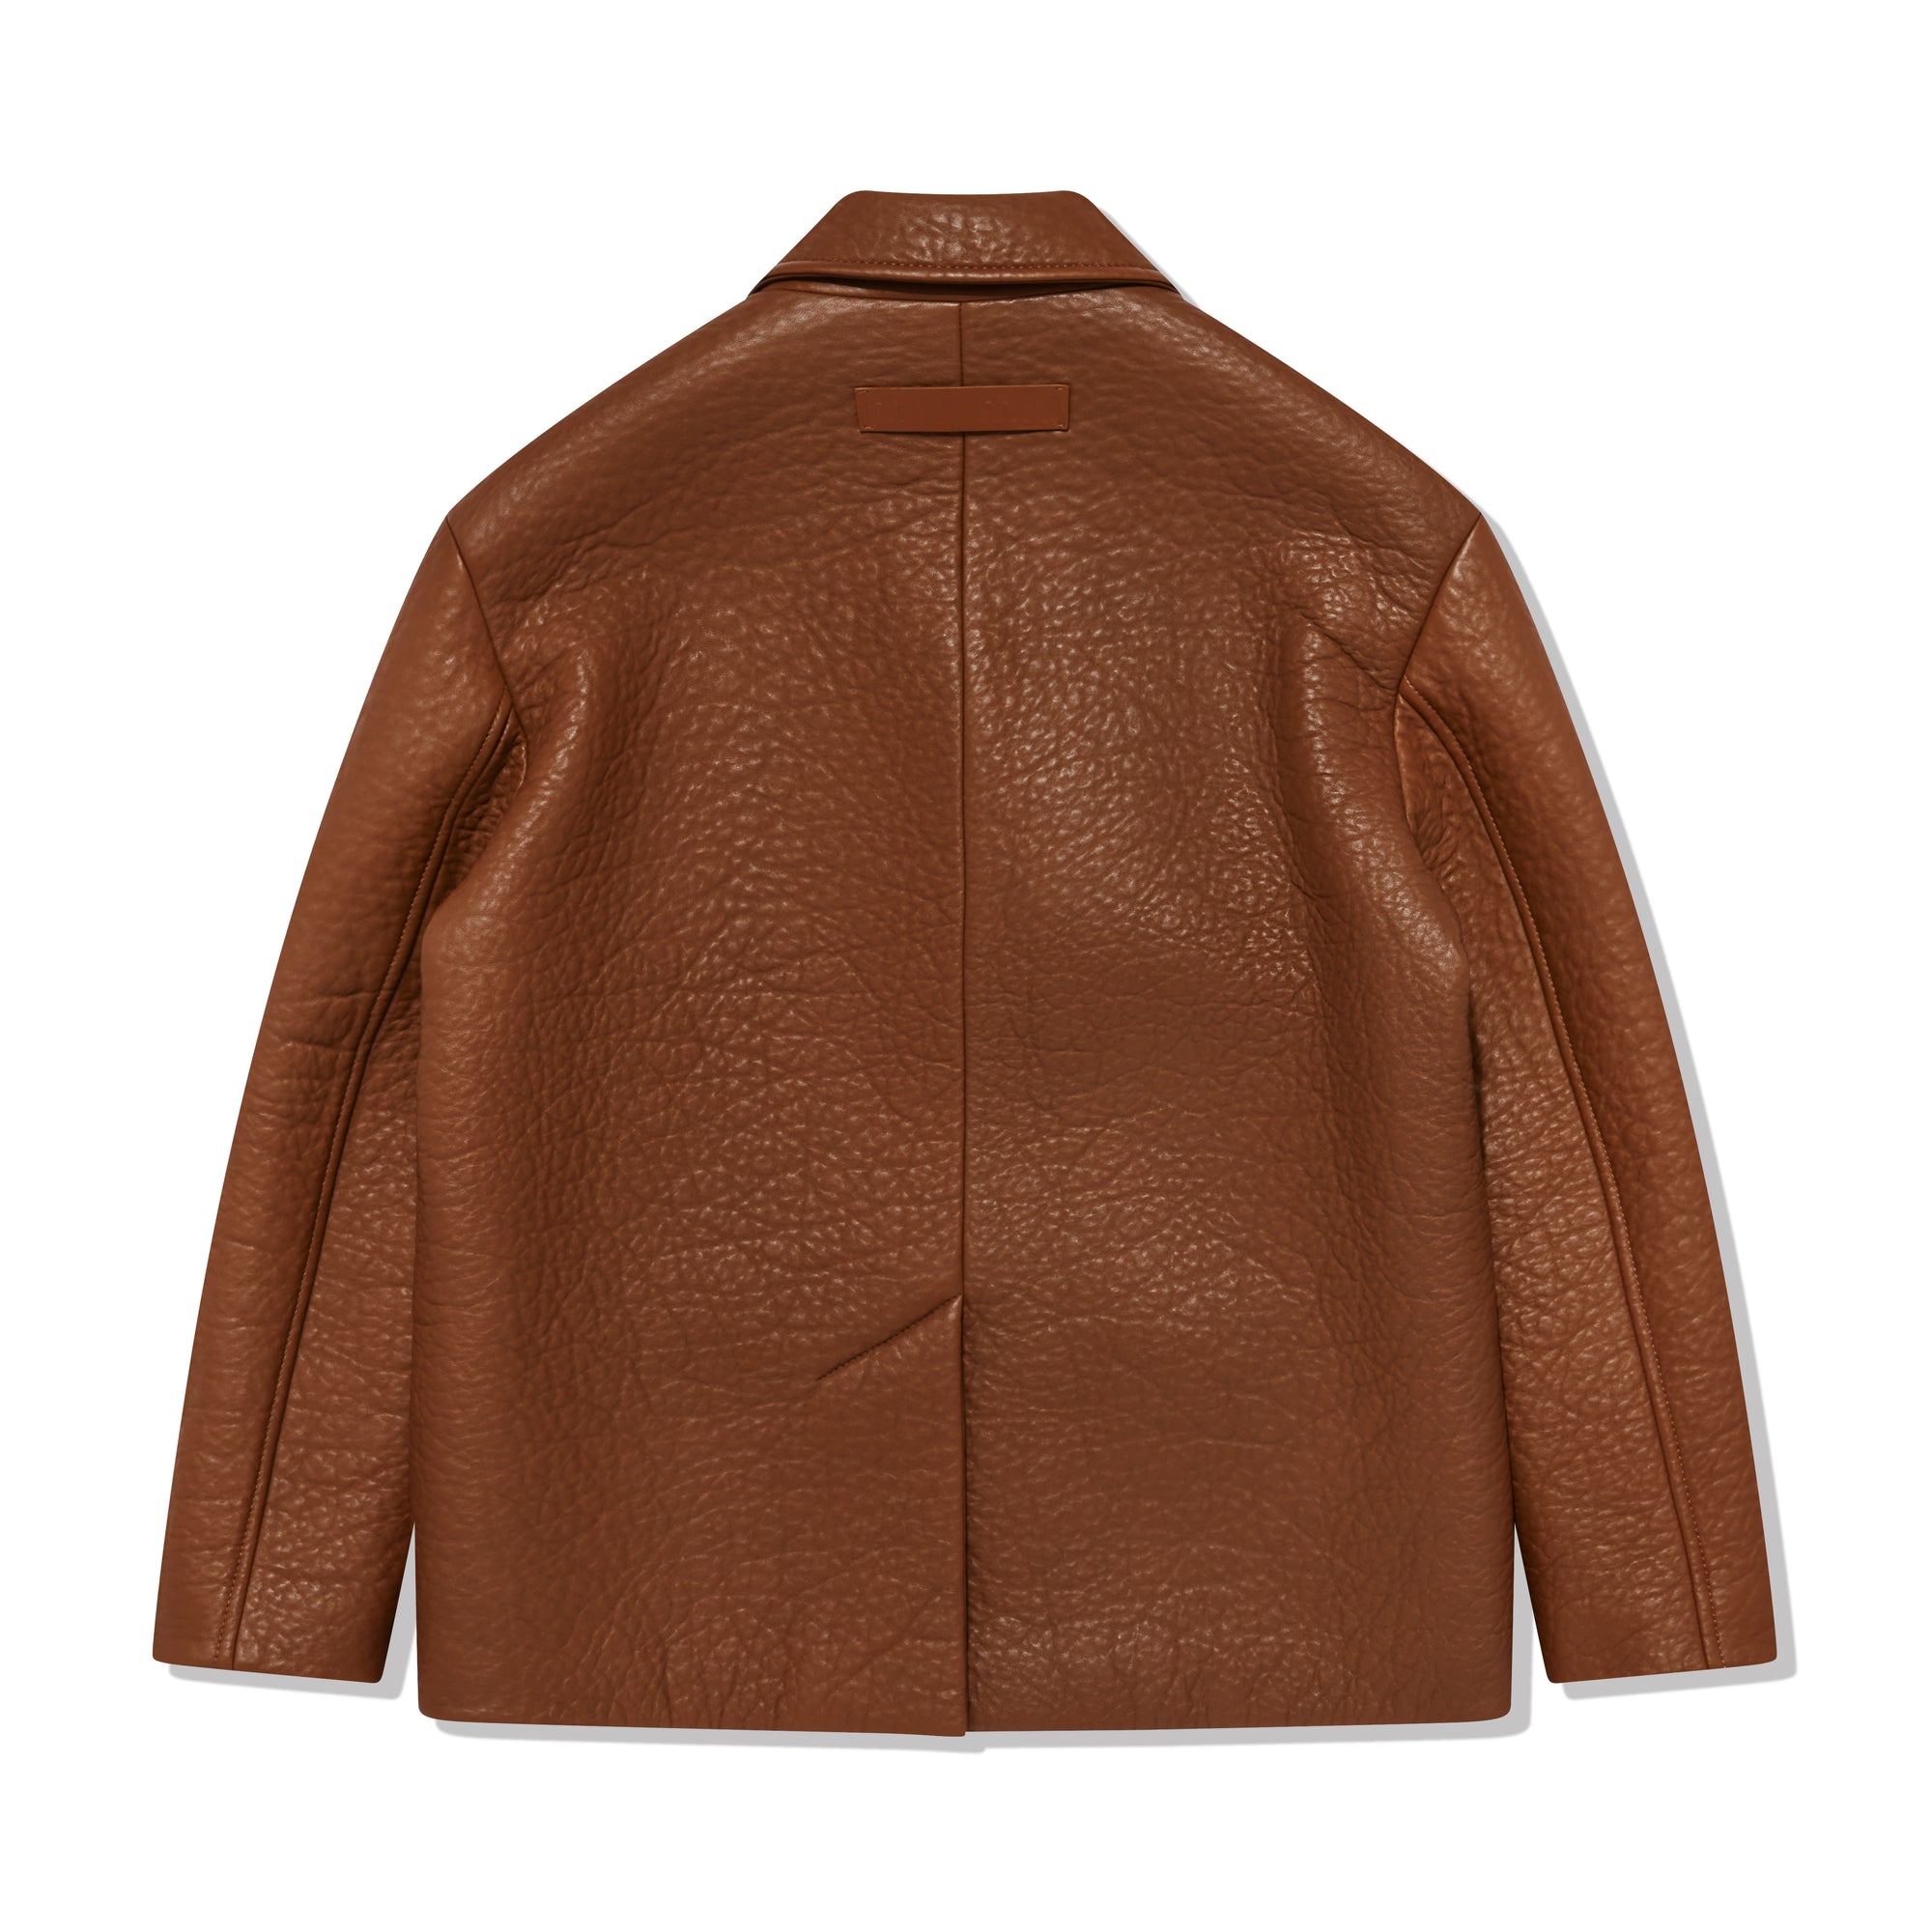 Miu Miu - Women's Nappa Leather Jacket - (Cognac) view 2